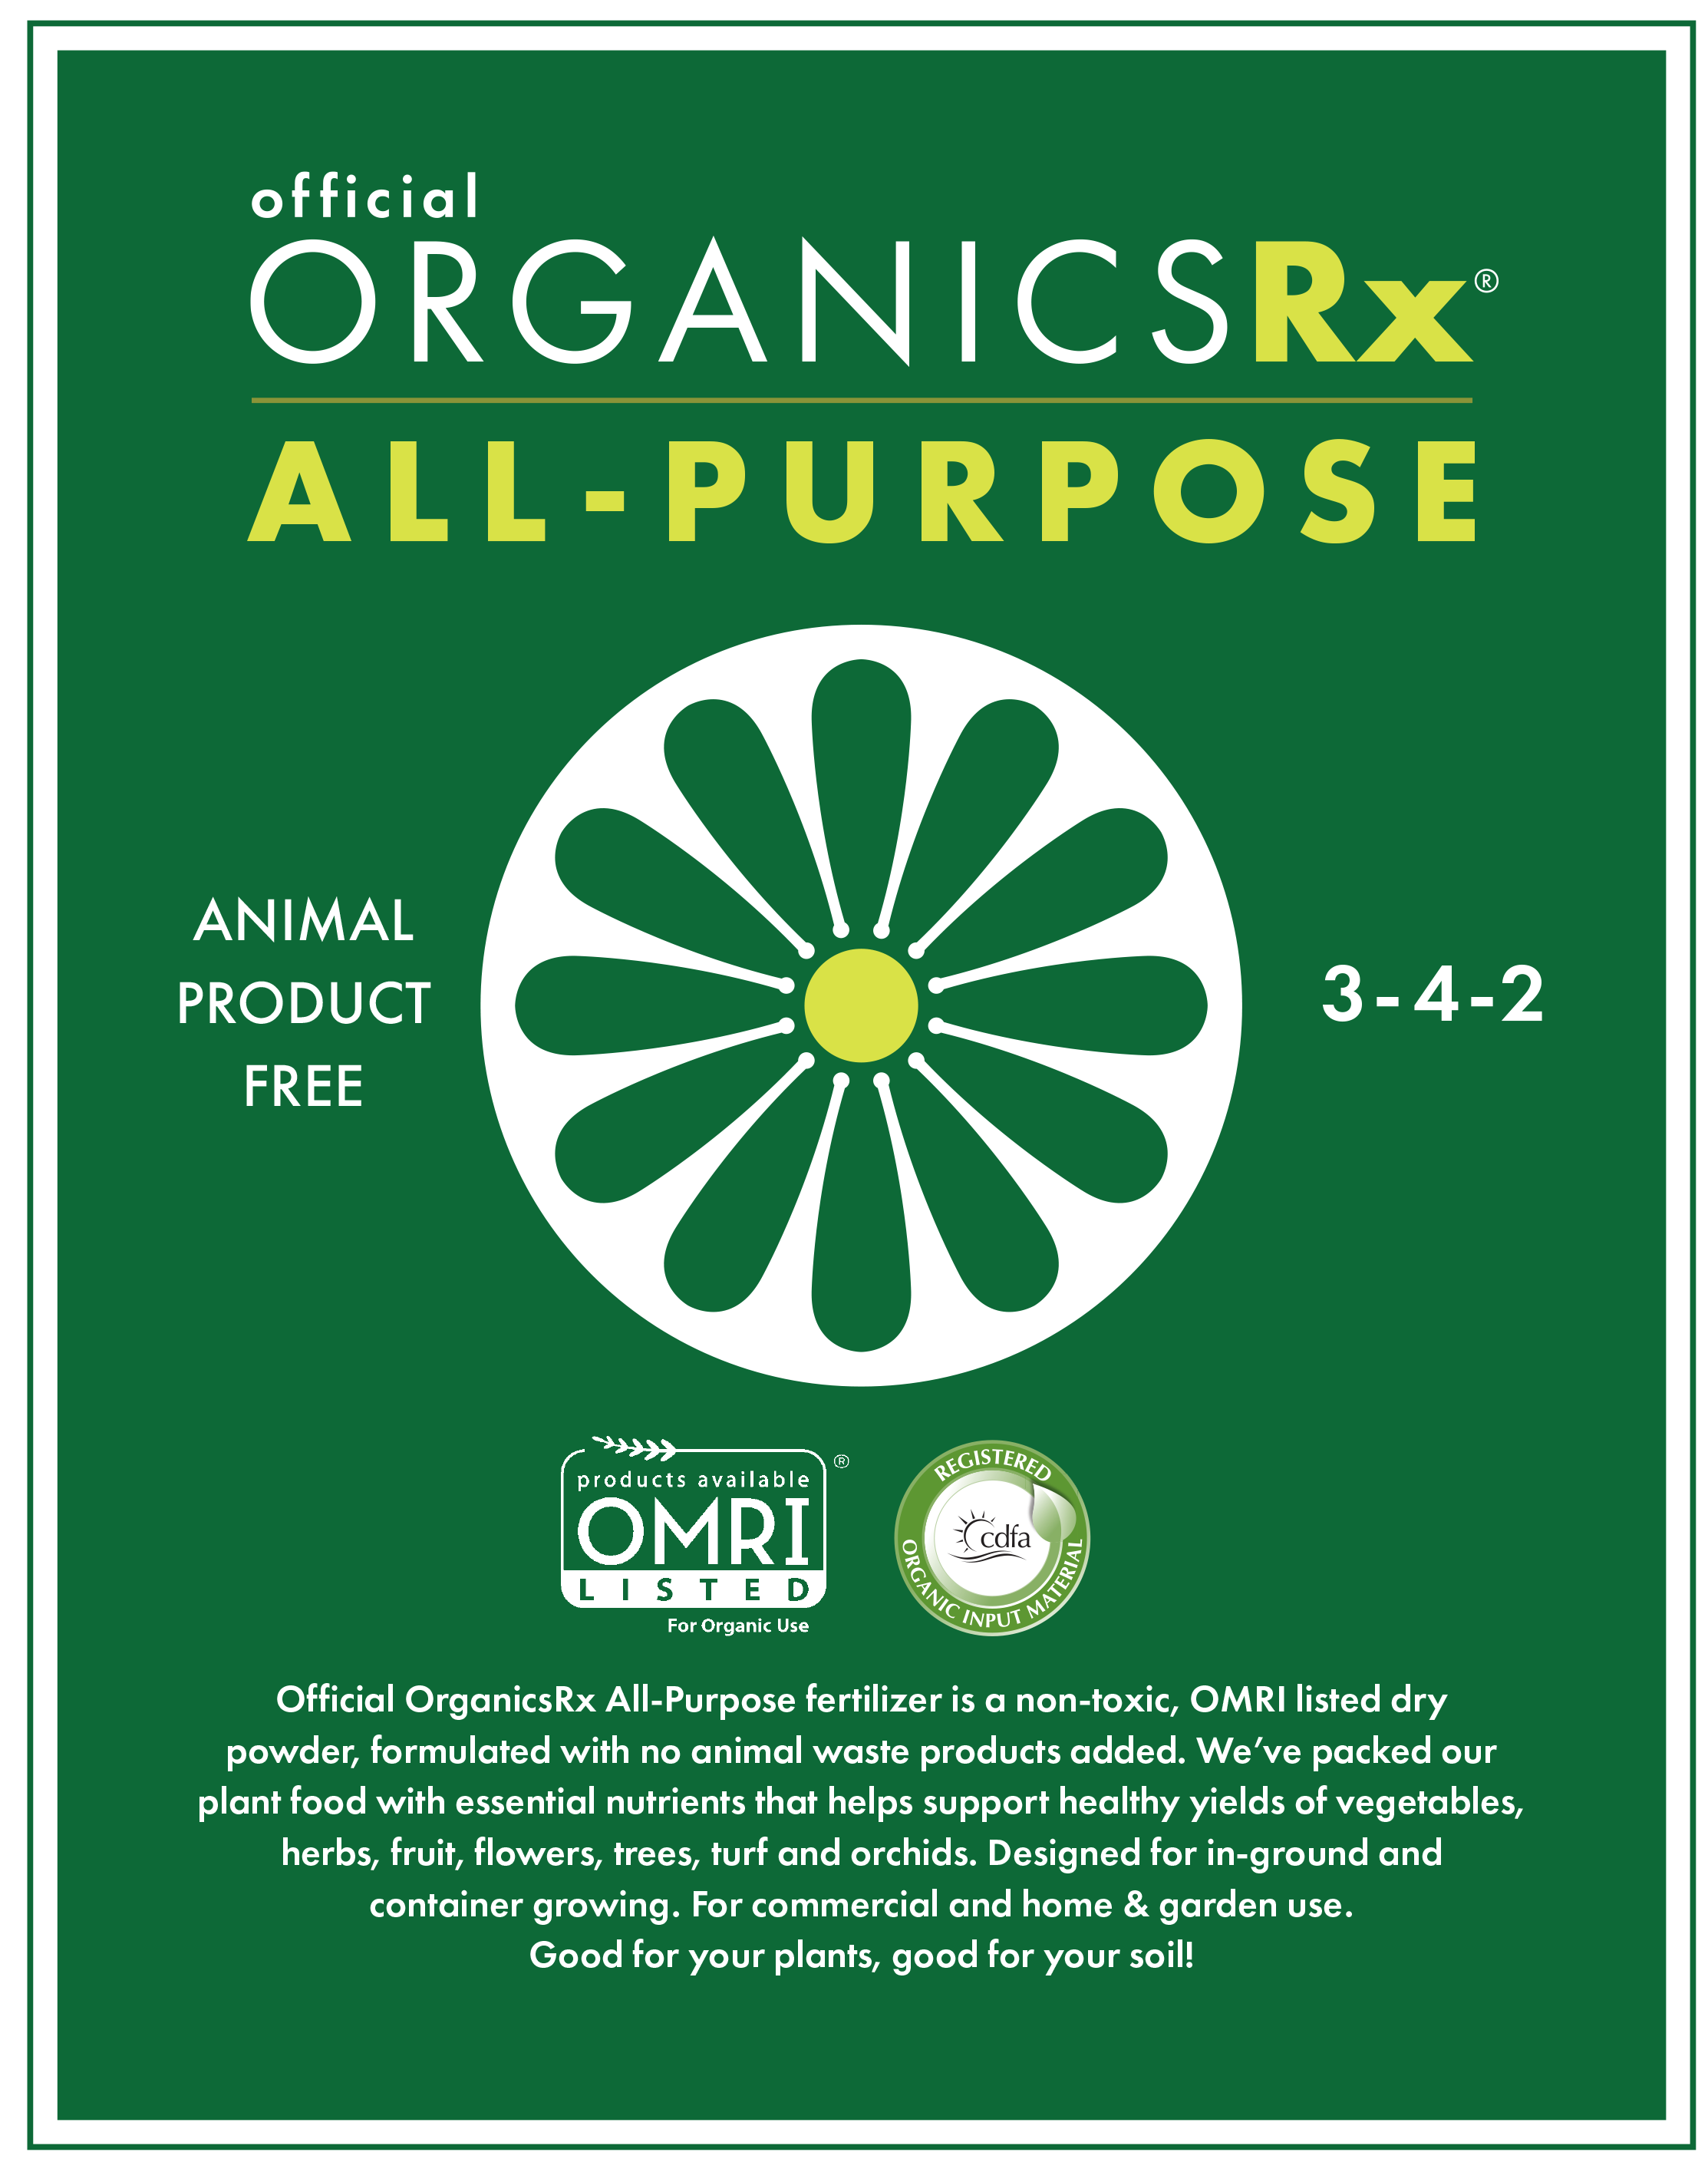 All Purpose plant based fertilizer label